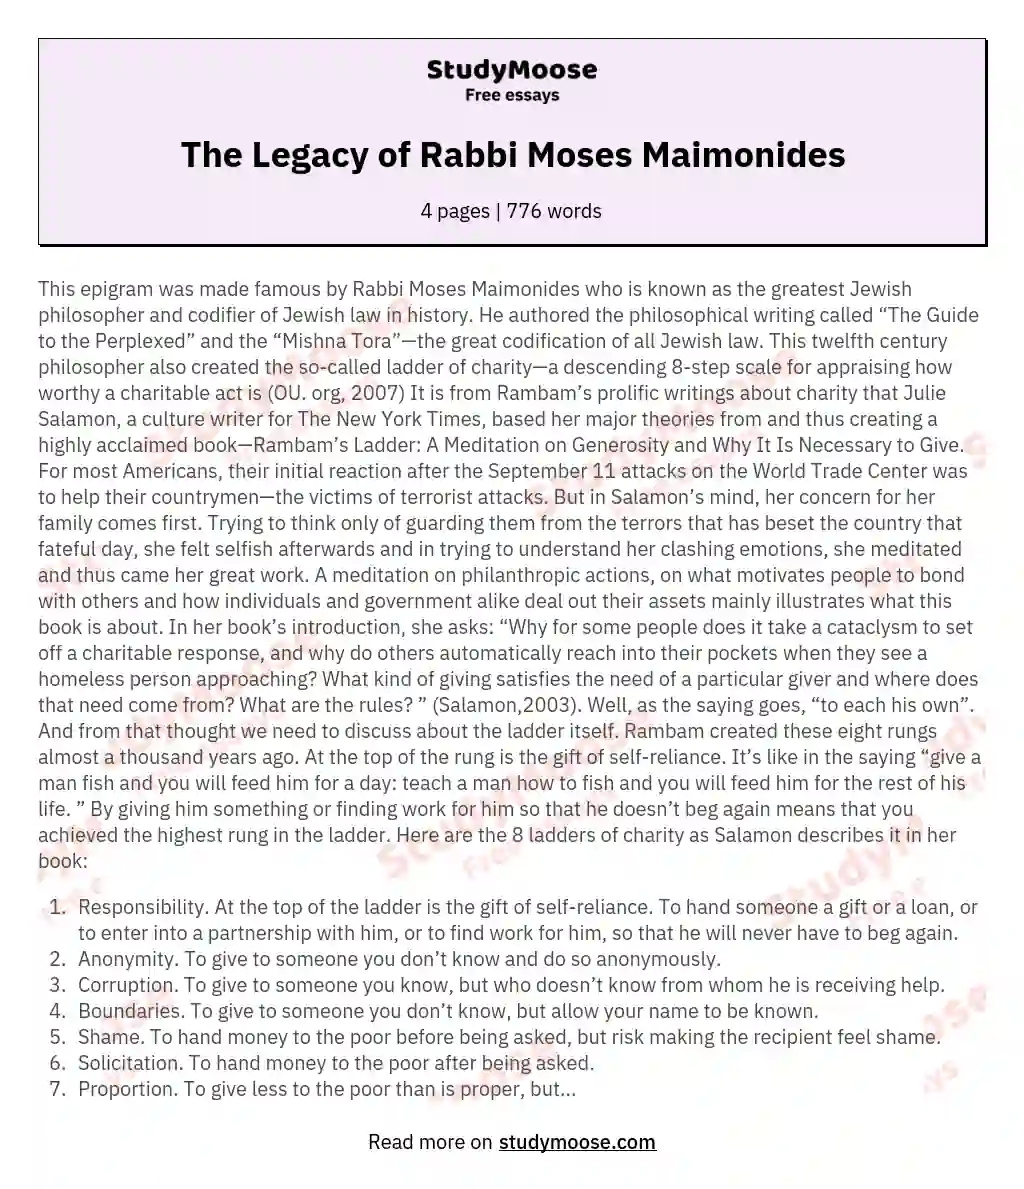 The Legacy of Rabbi Moses Maimonides essay